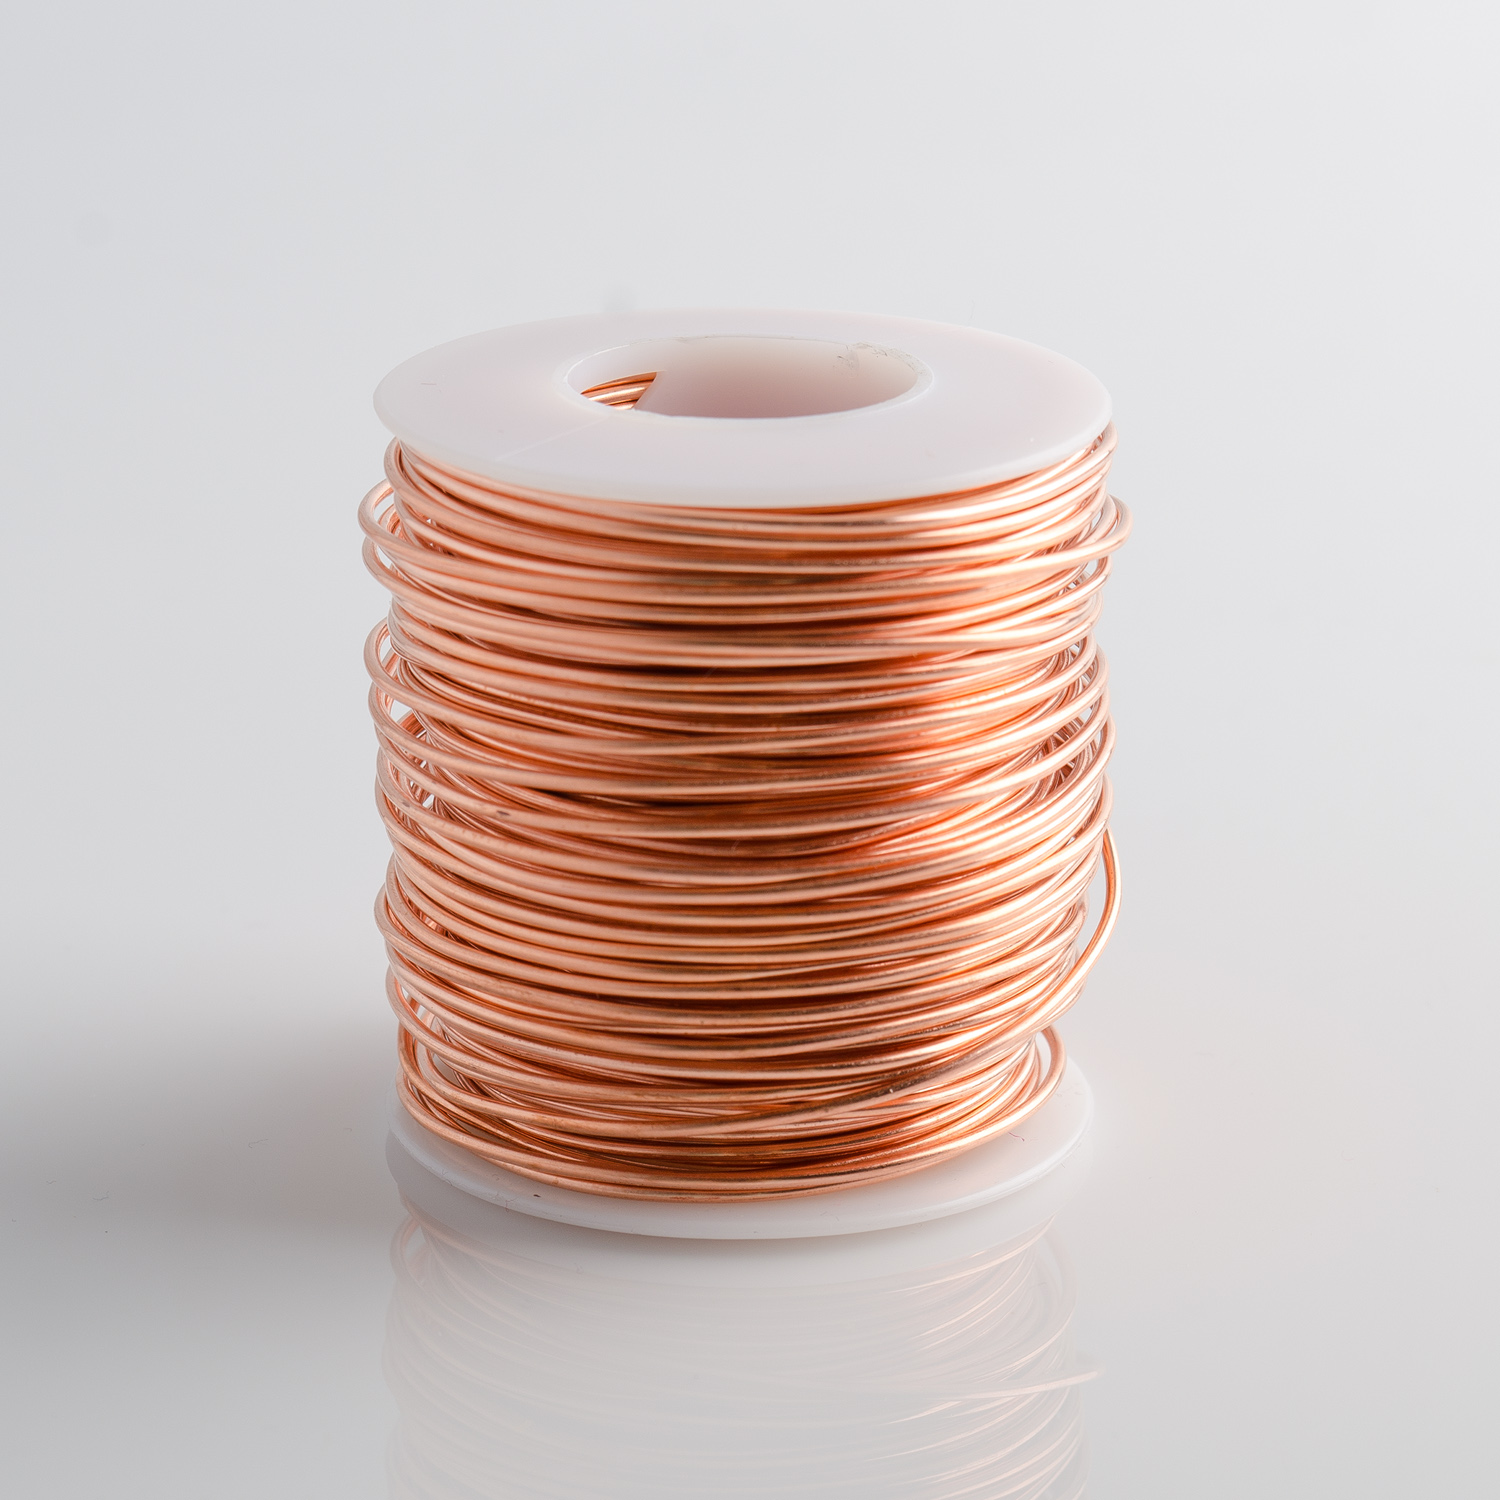 20 Gauge Round Dead Soft Copper Wire - 1LB: Jewelry Making